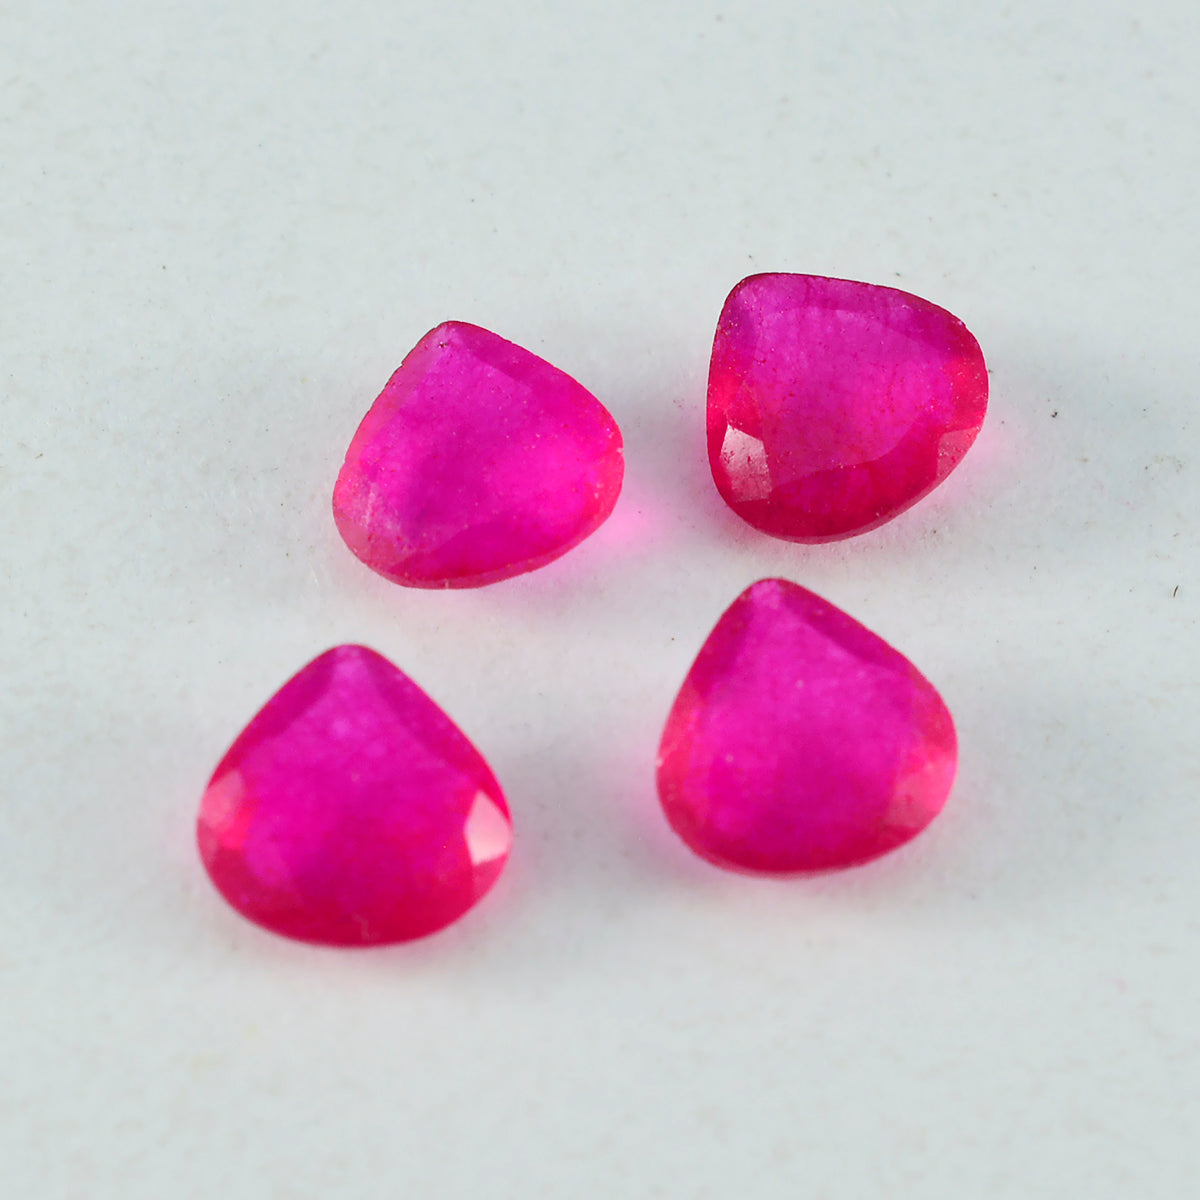 Riyogems 1PC Real Red Jasper Faceted 14x14 mm Heart Shape sweet Quality Gemstone